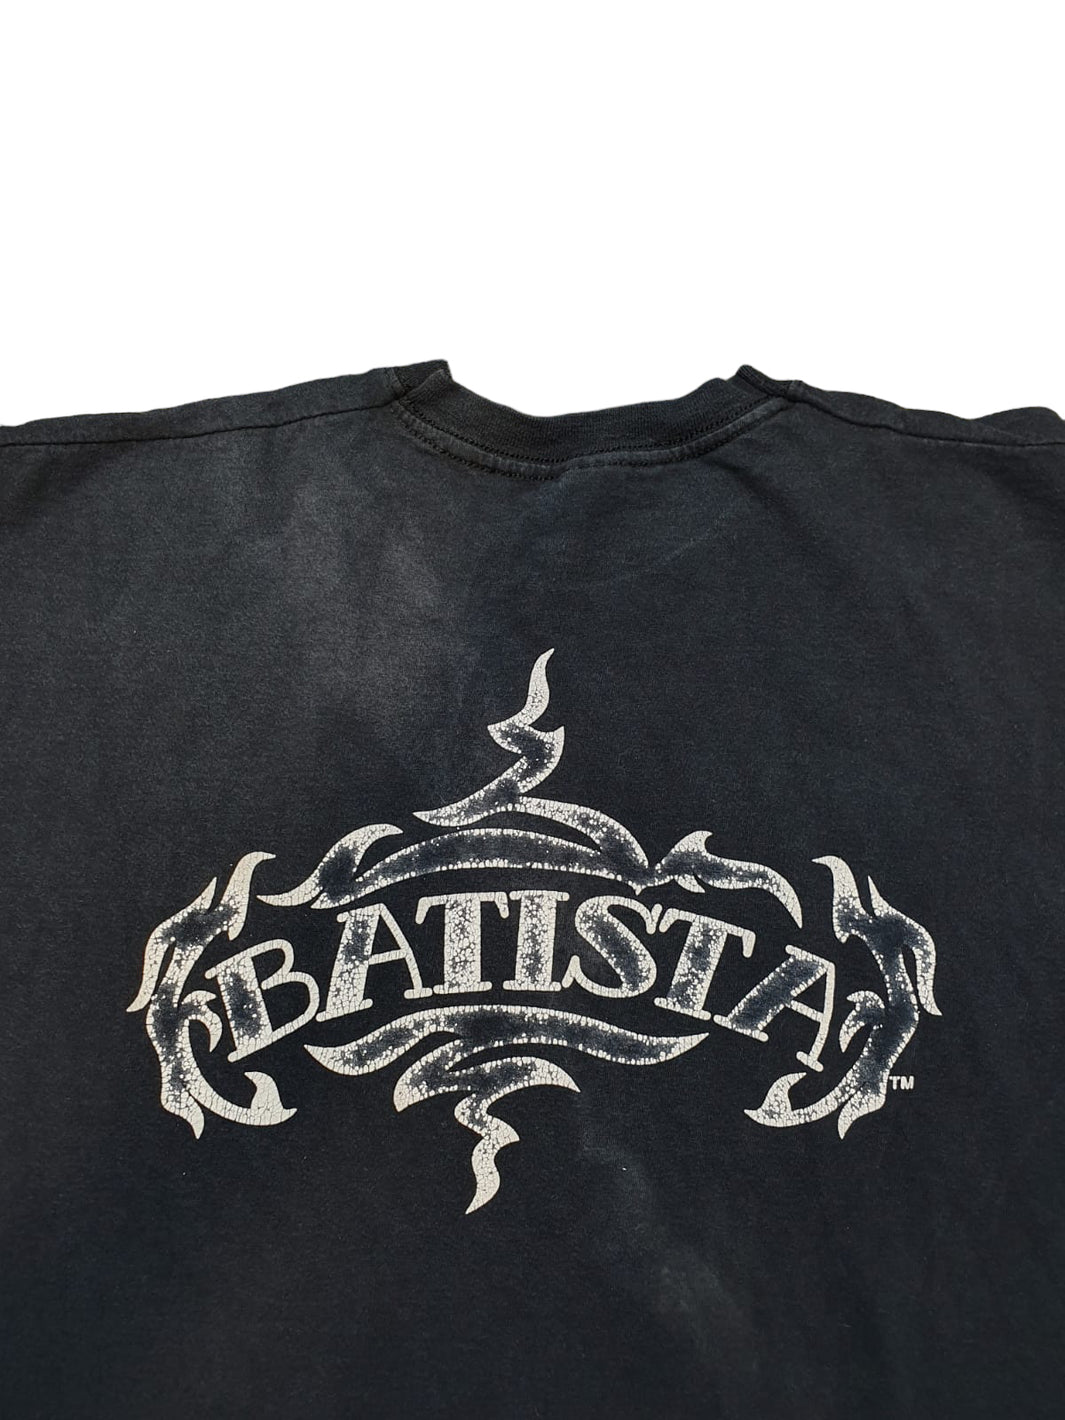 Batista WWE Shirt